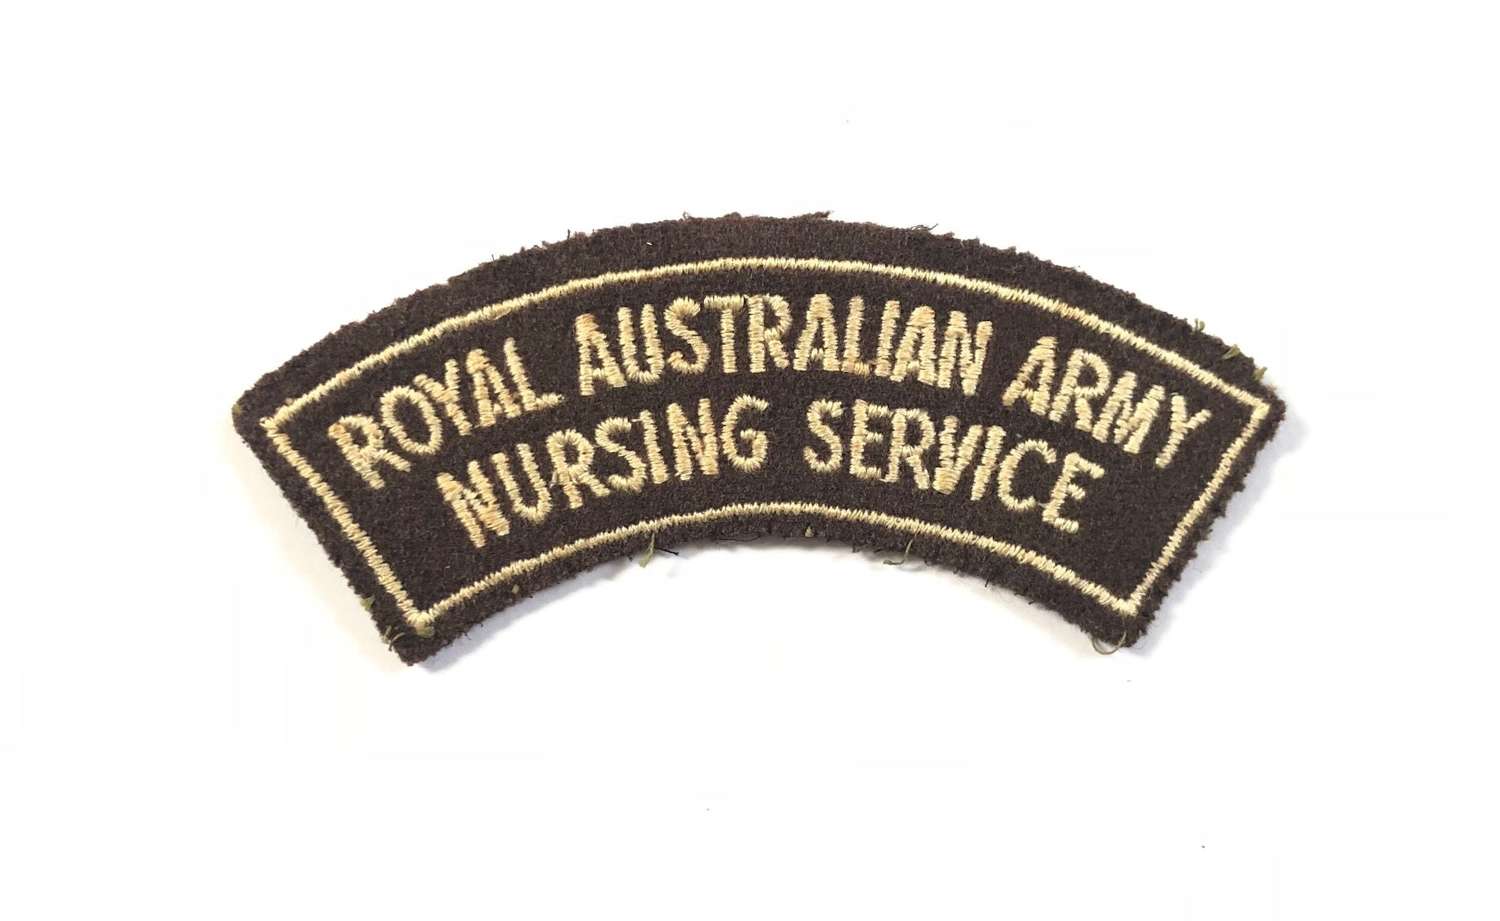 Royal Australian Army Nursing Service Cloth Badge.